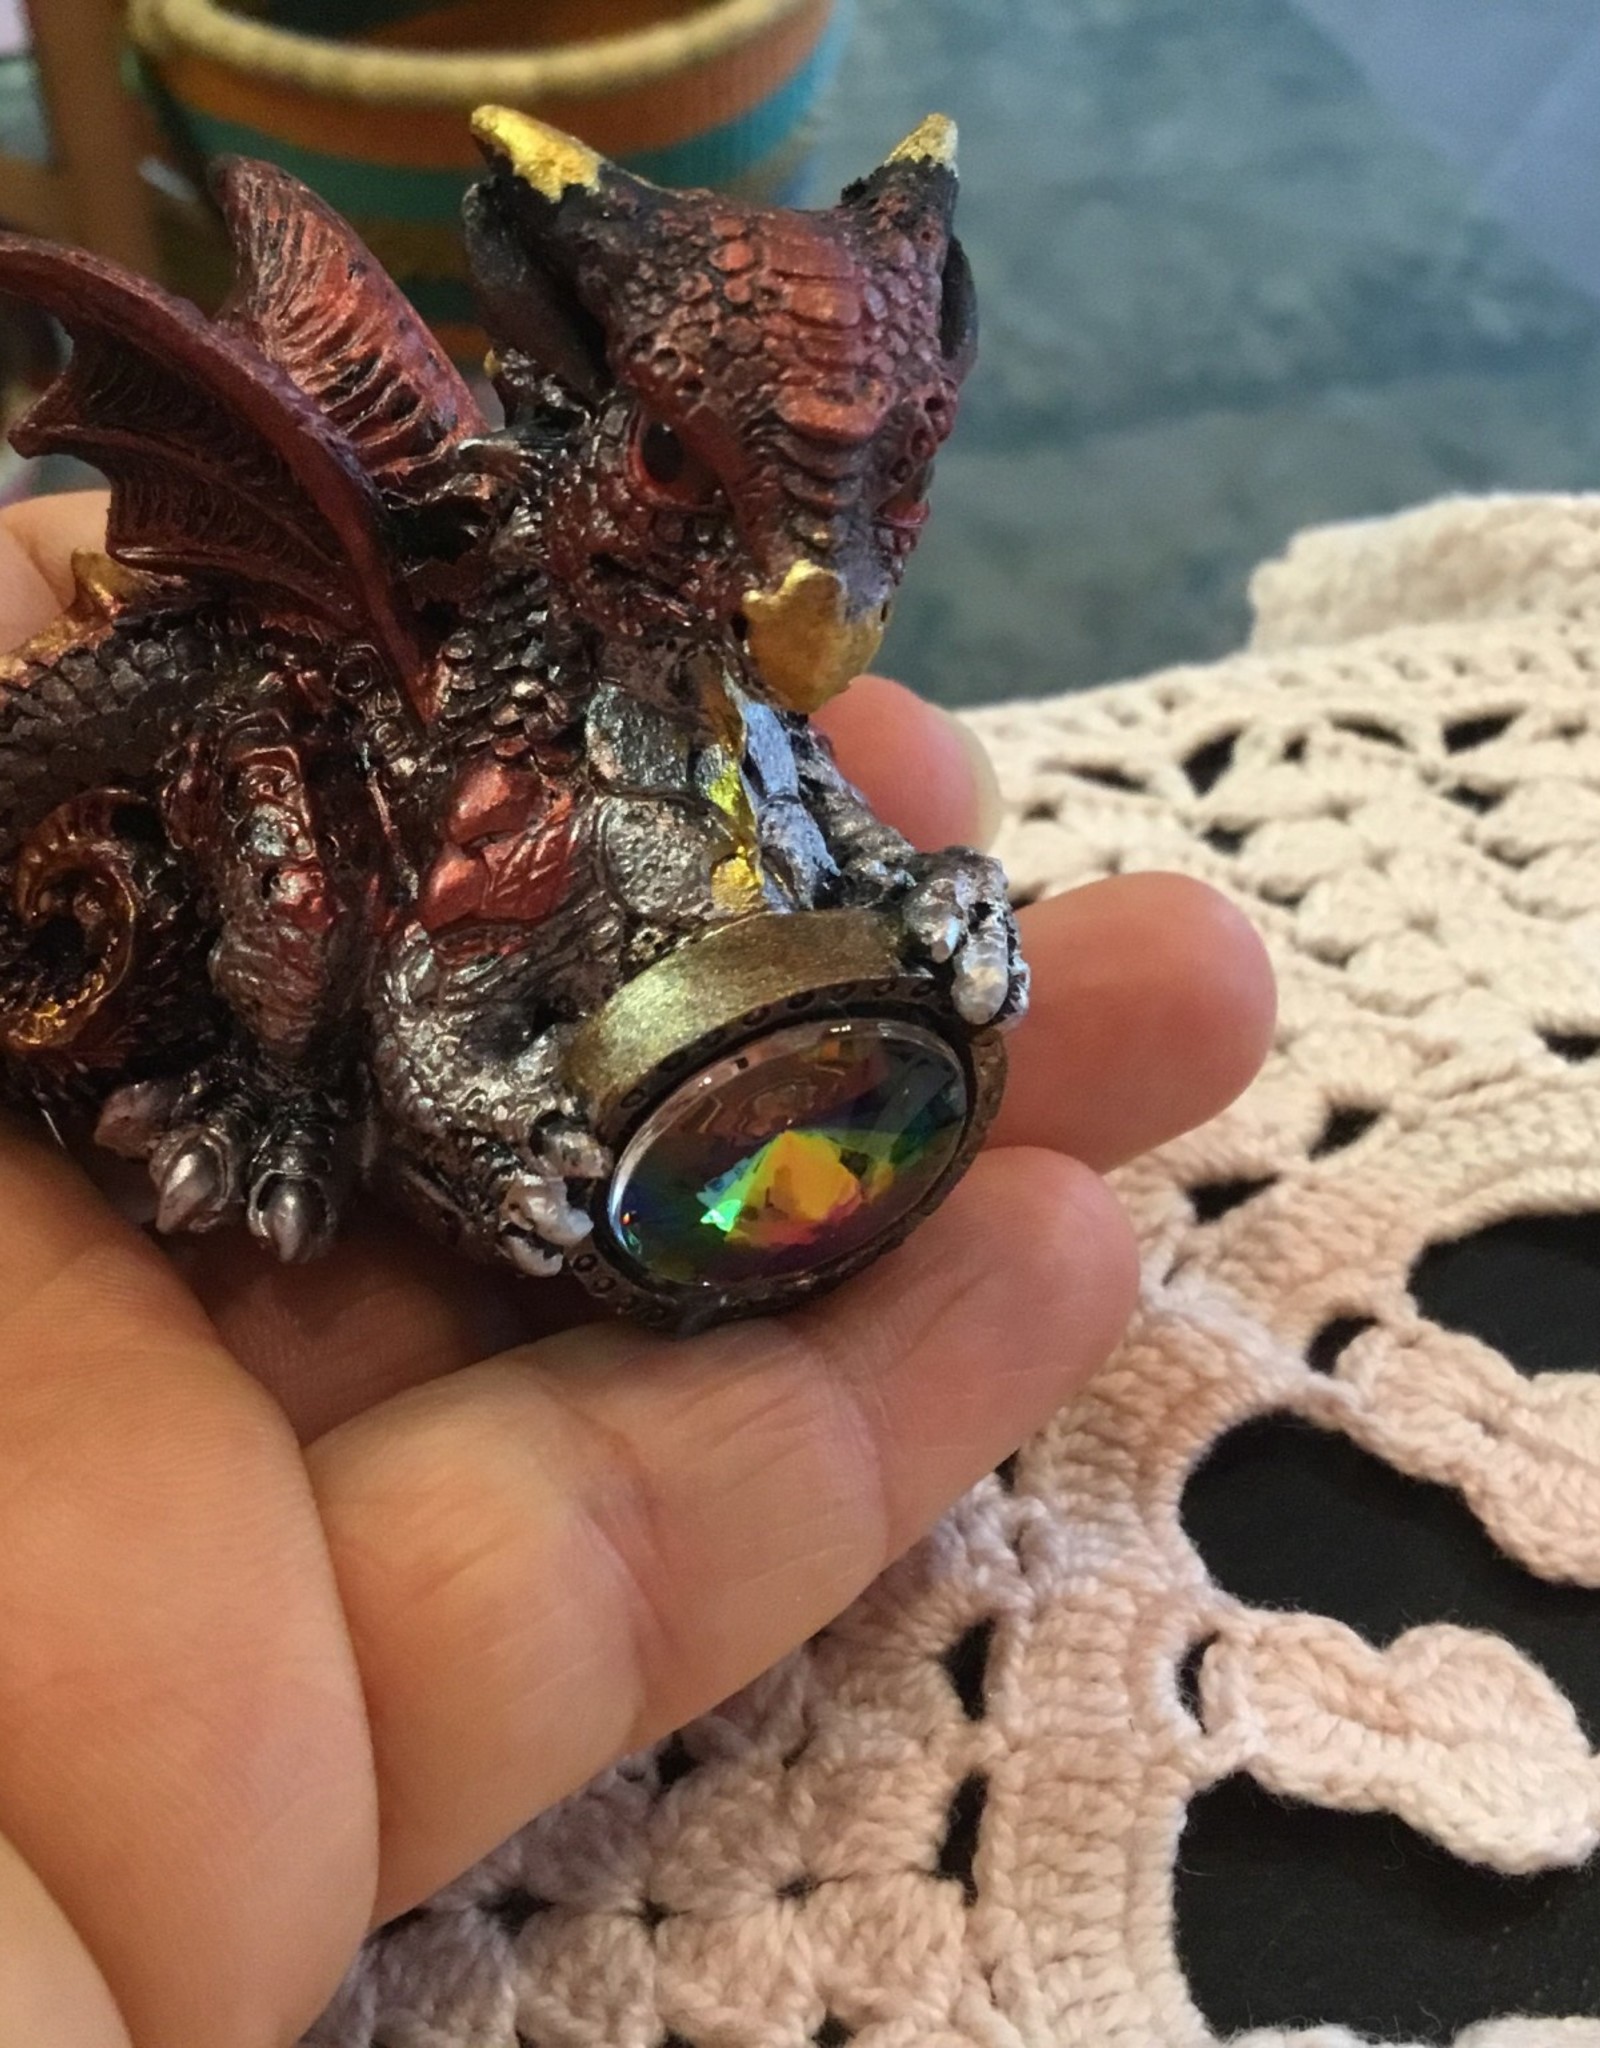 Iridescent Baby Dragon with gem 2''